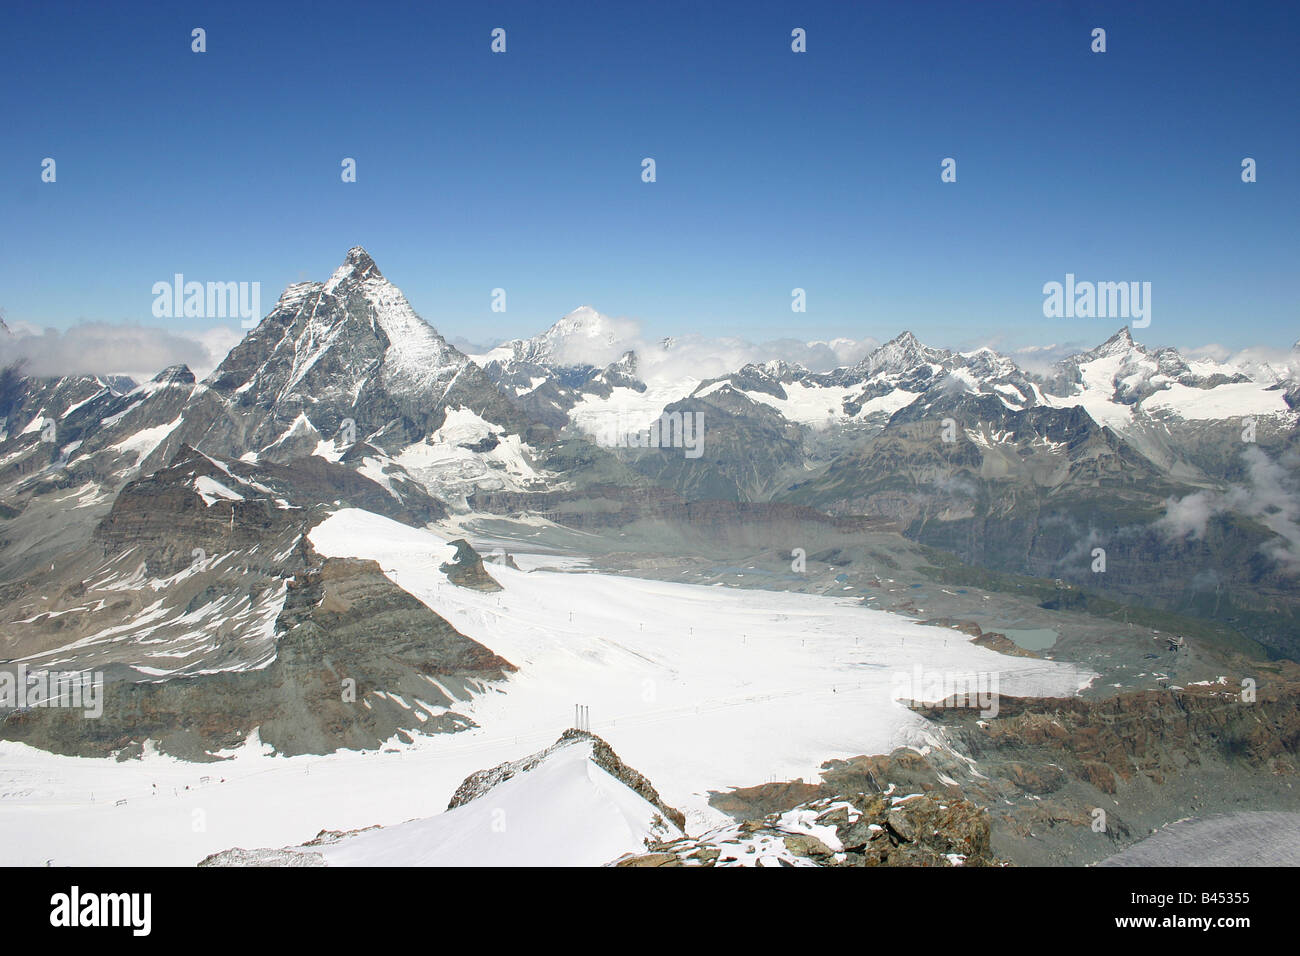 Svizzera - Cervino montagna delle Alpi Foto Stock